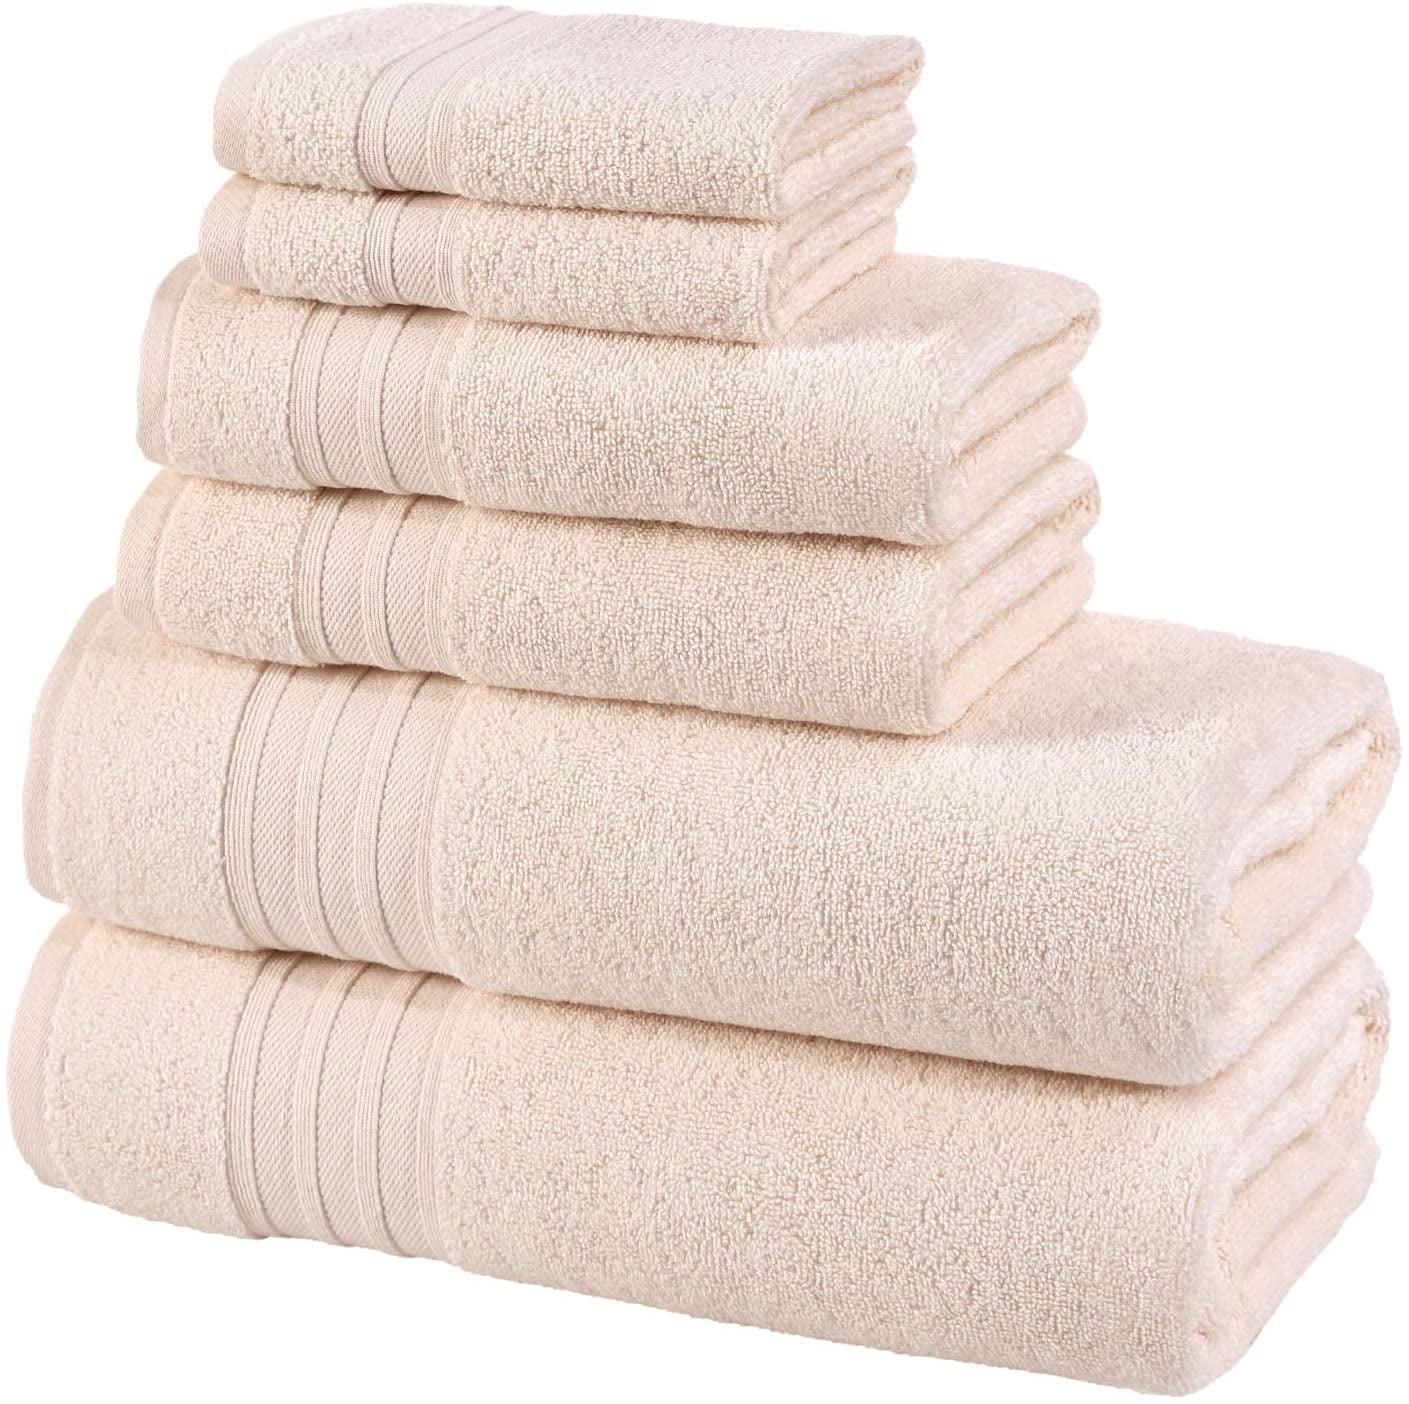 bathroom towel linen towel throw hammam towel Egyptian cotton beach towel 